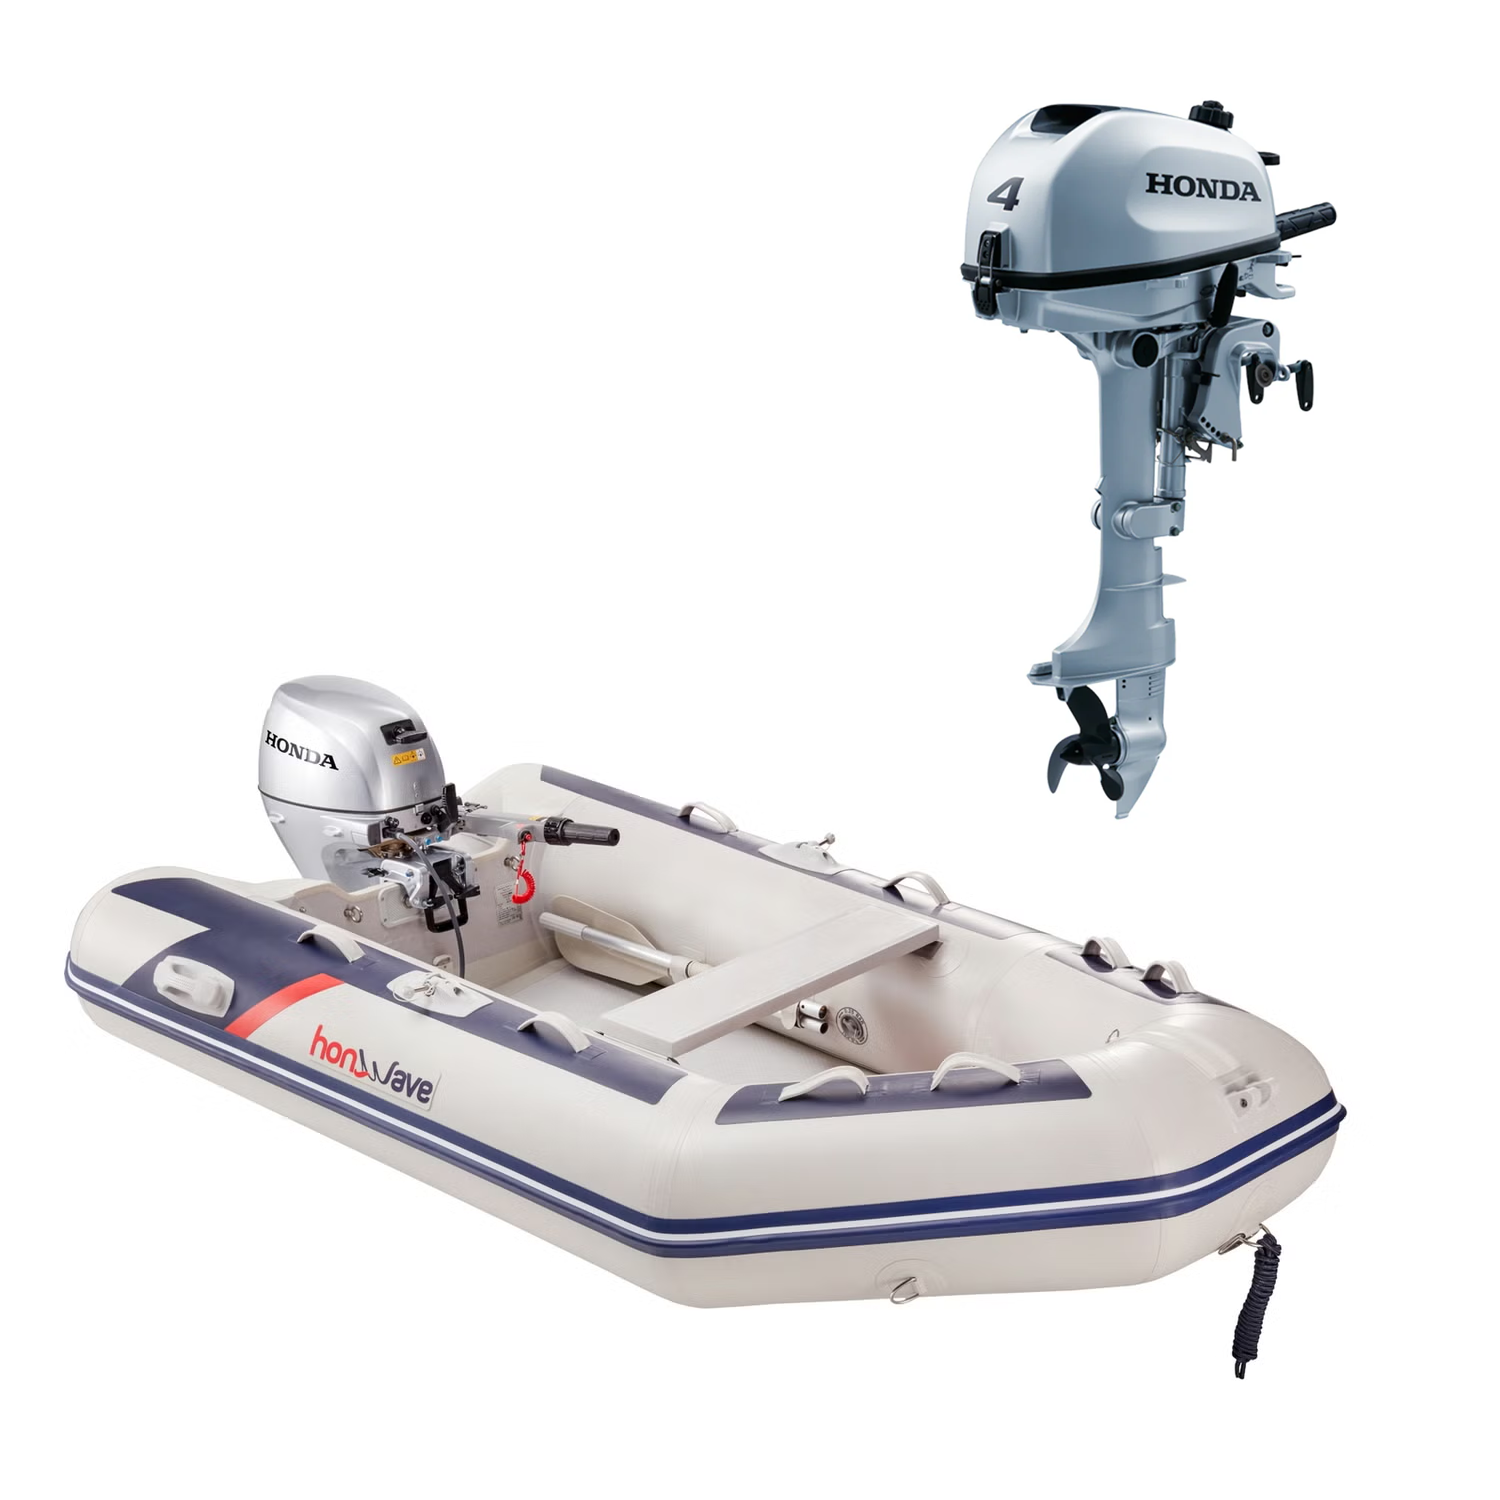 Honwave Inflatable Boat + 4HP Honda Outboard (Ex Display Package)